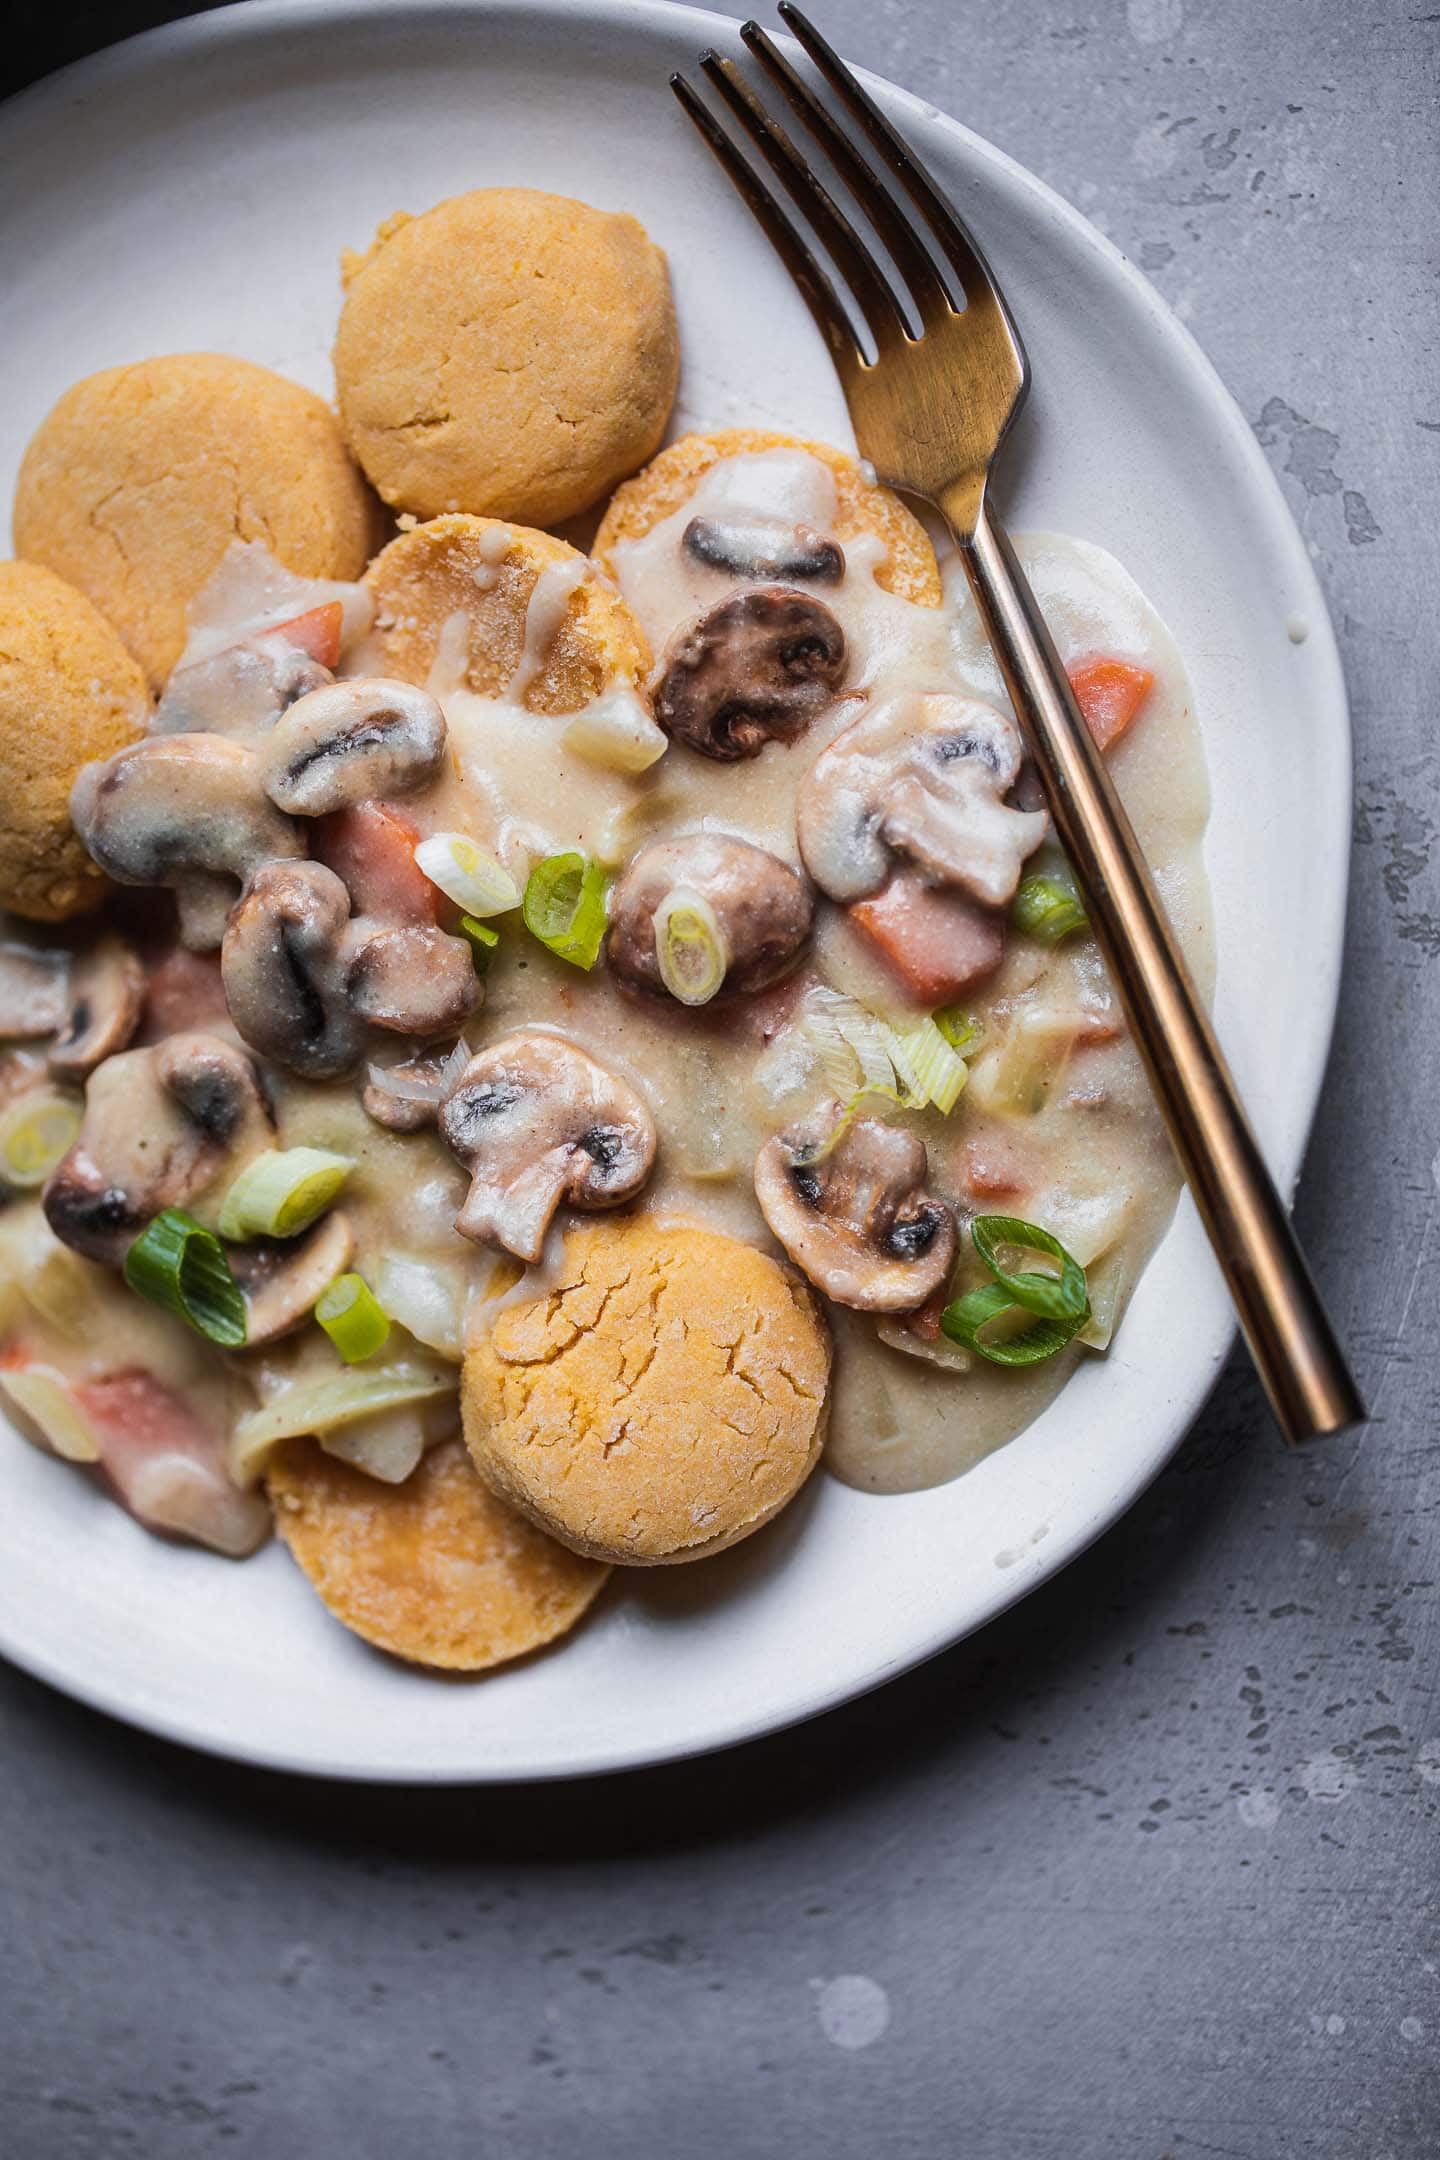 Mushroom gravy with vegan biscuits